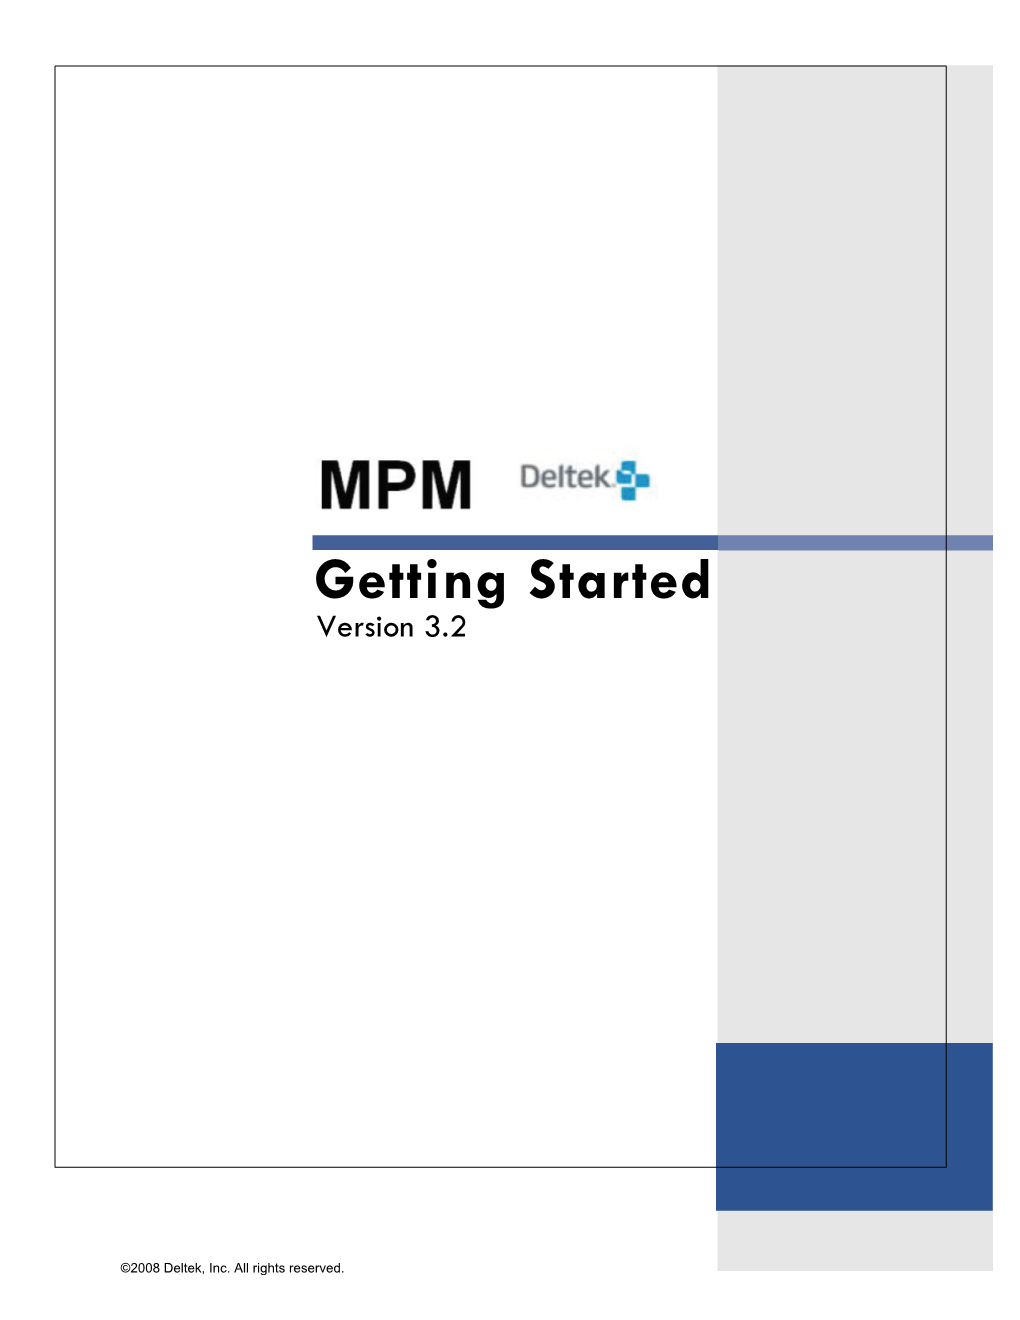 MPM Getting Started 3